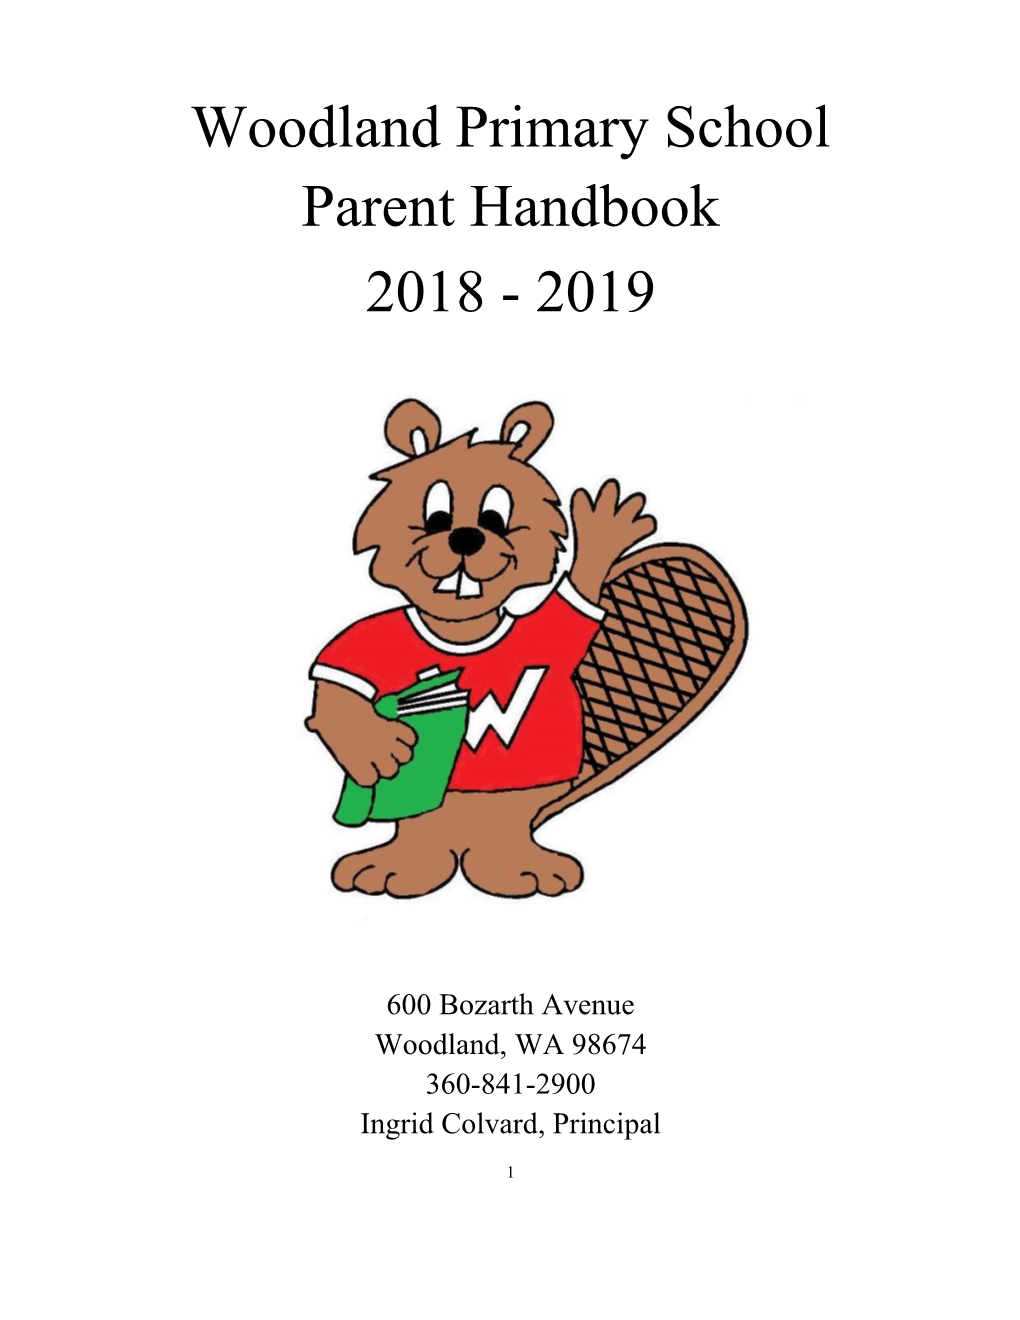 Woodland Primary School Parent Handbook 2018 - 2019